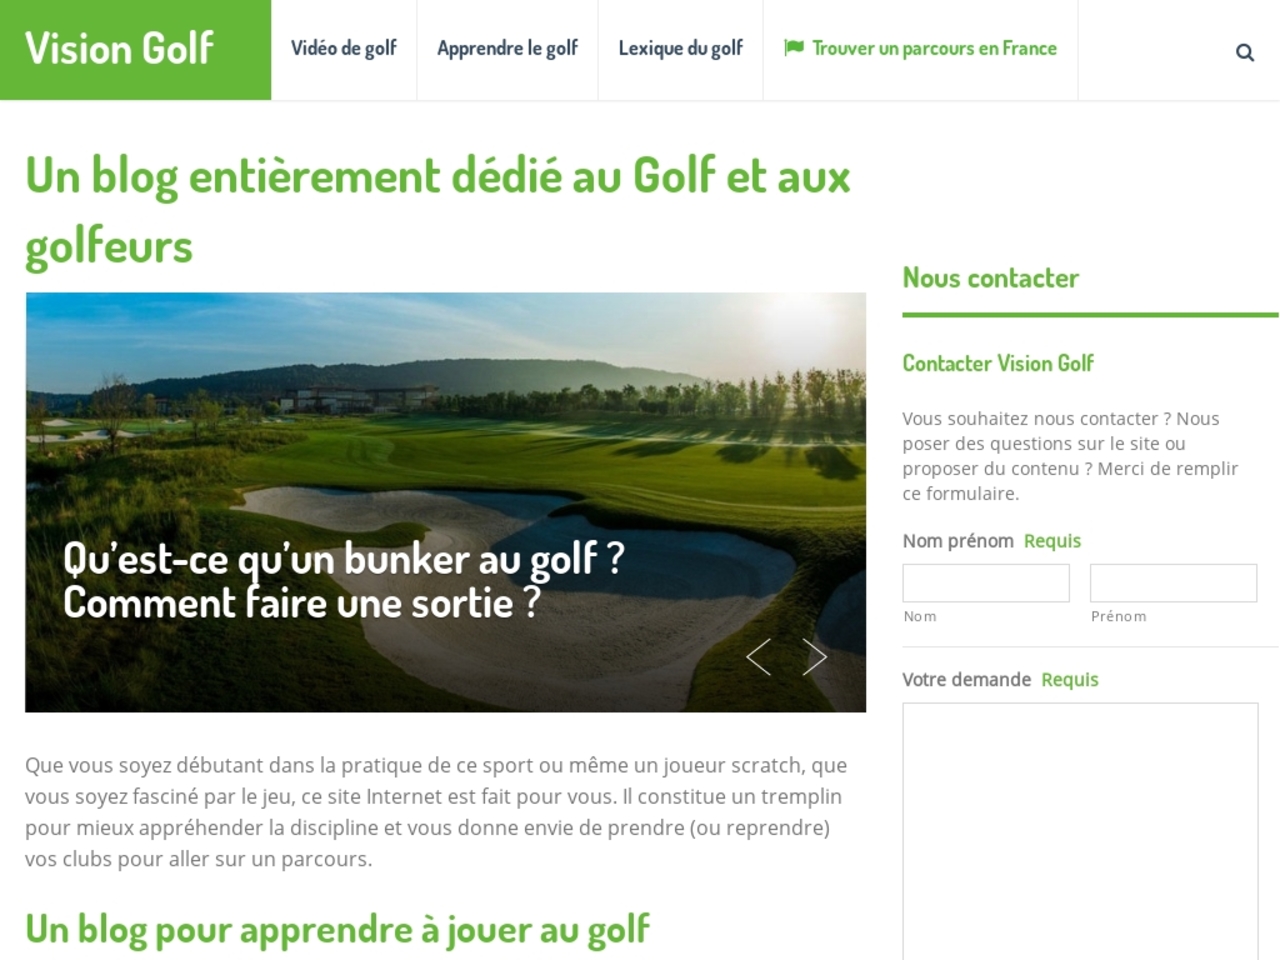 Vision Golf, guide d'apprentissage du golf